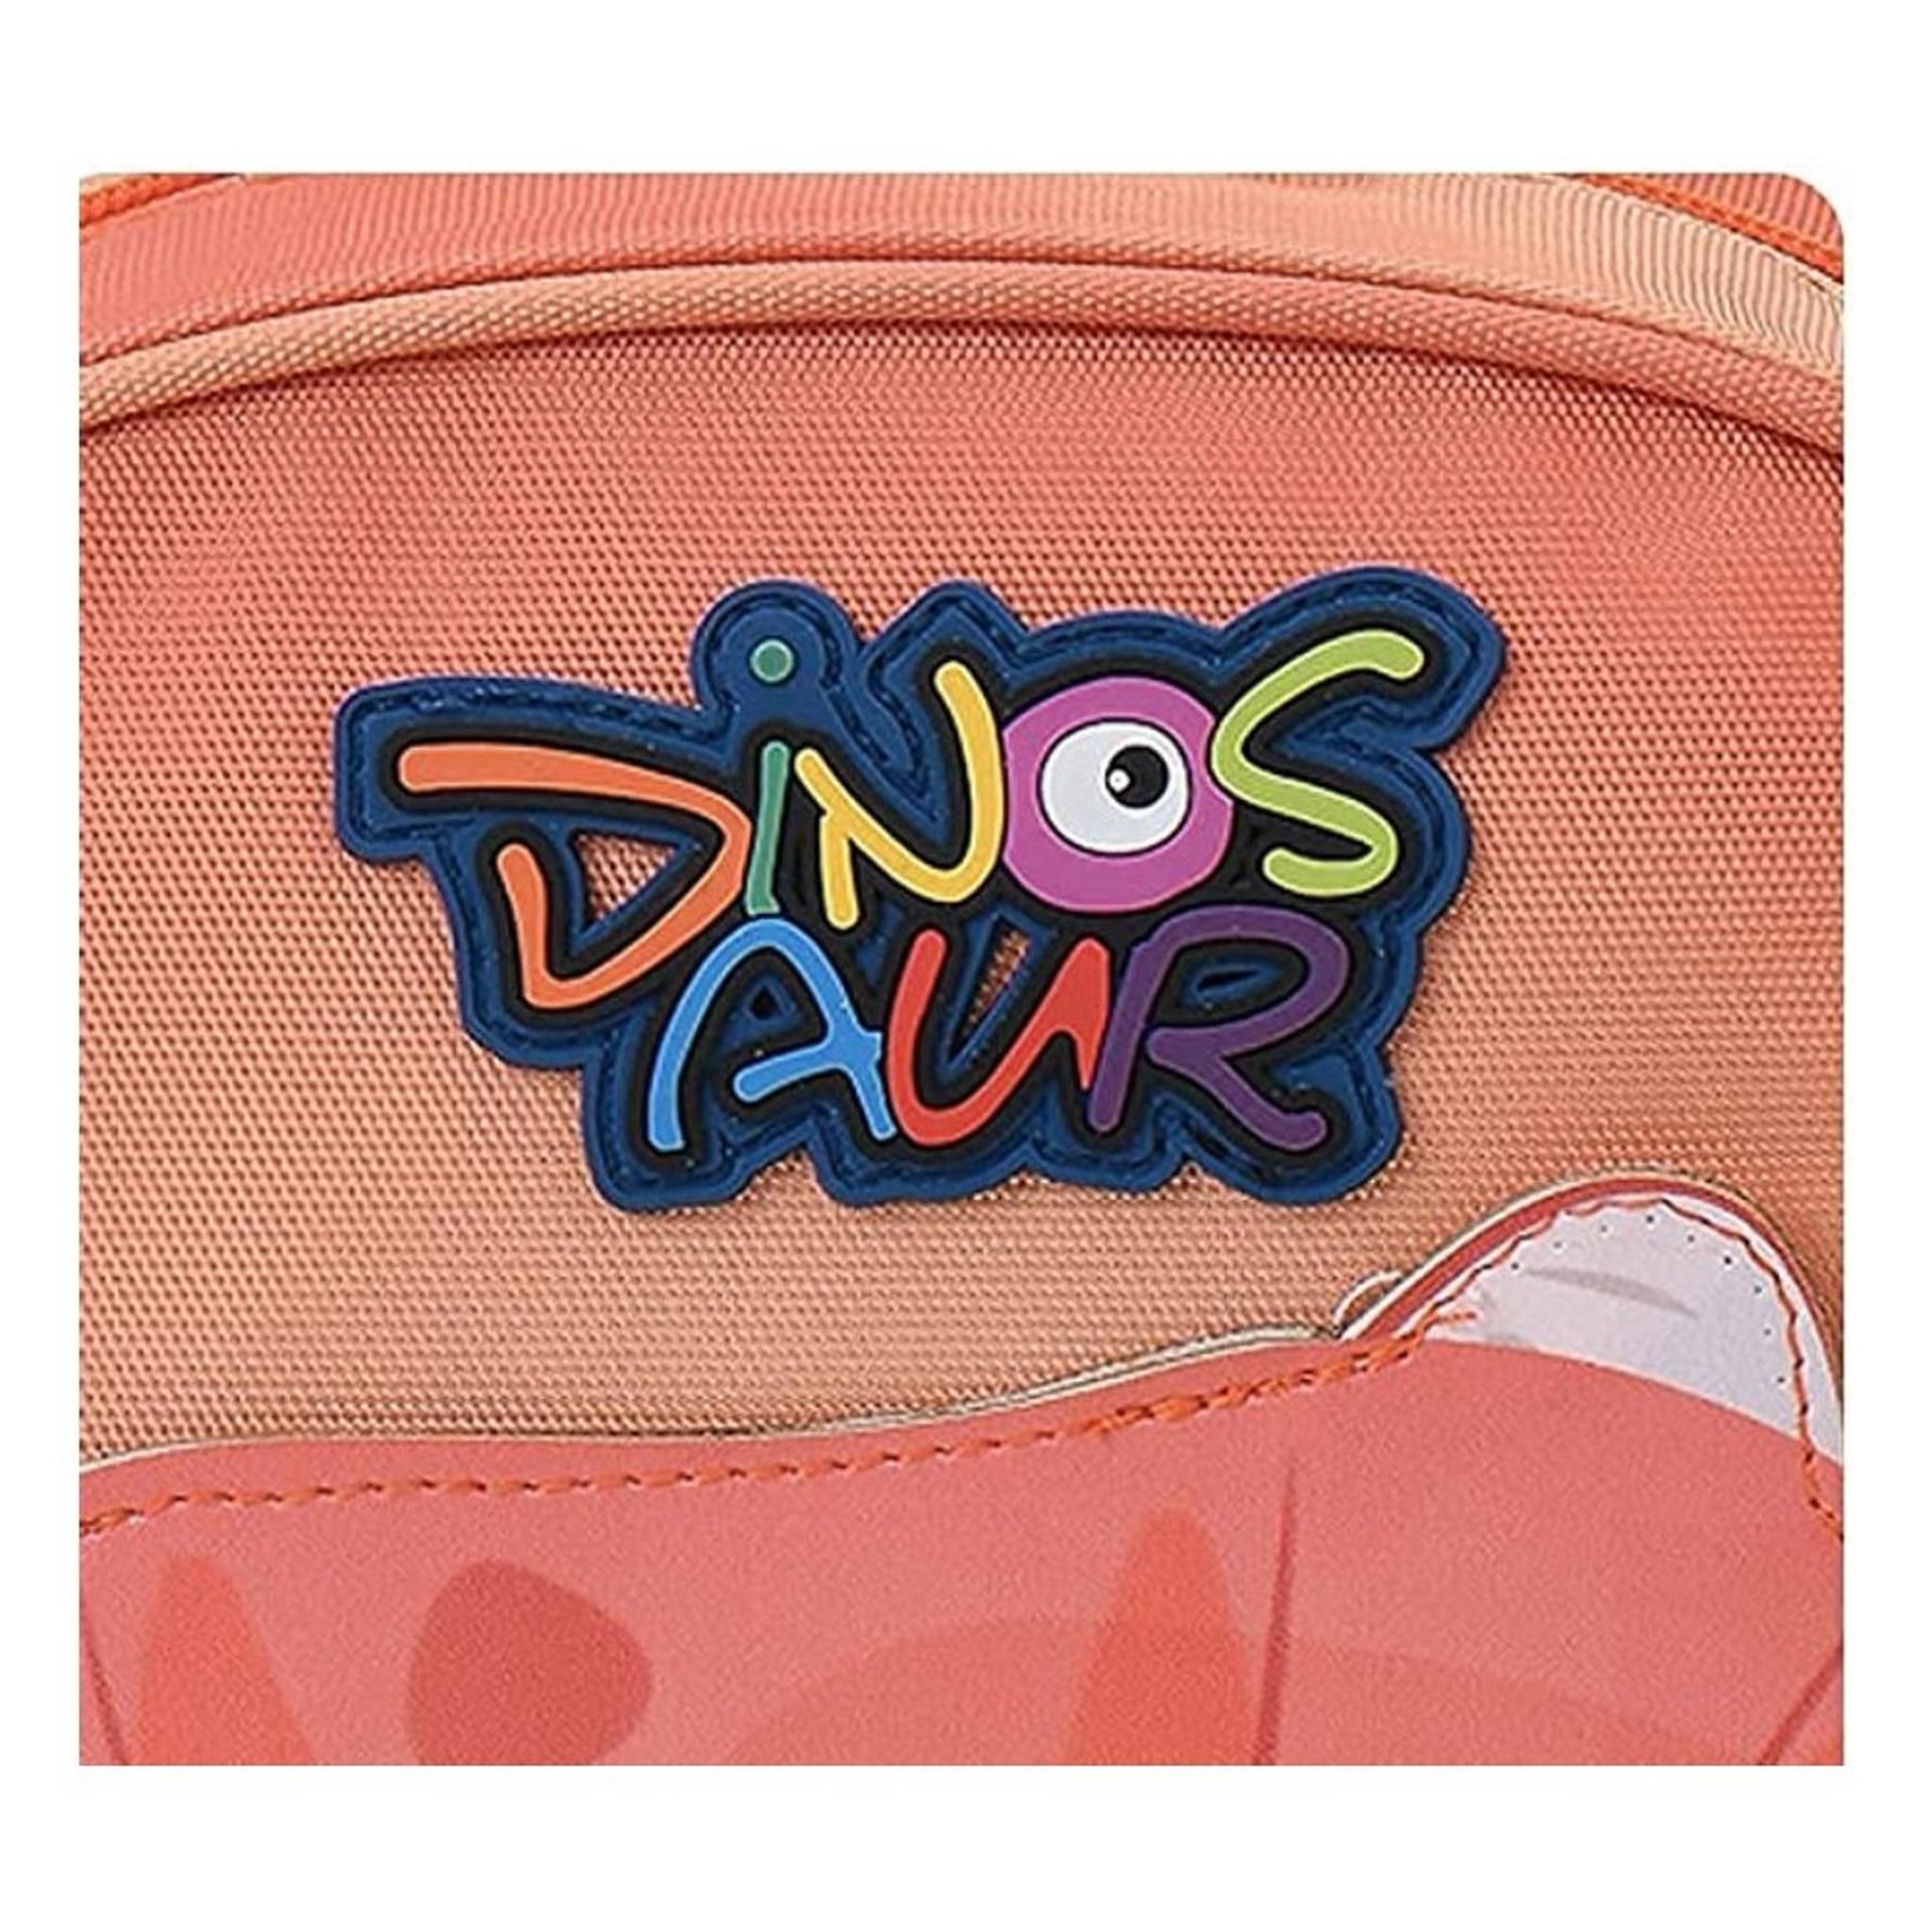 Riwbox Dinosaur Backpack - Orange